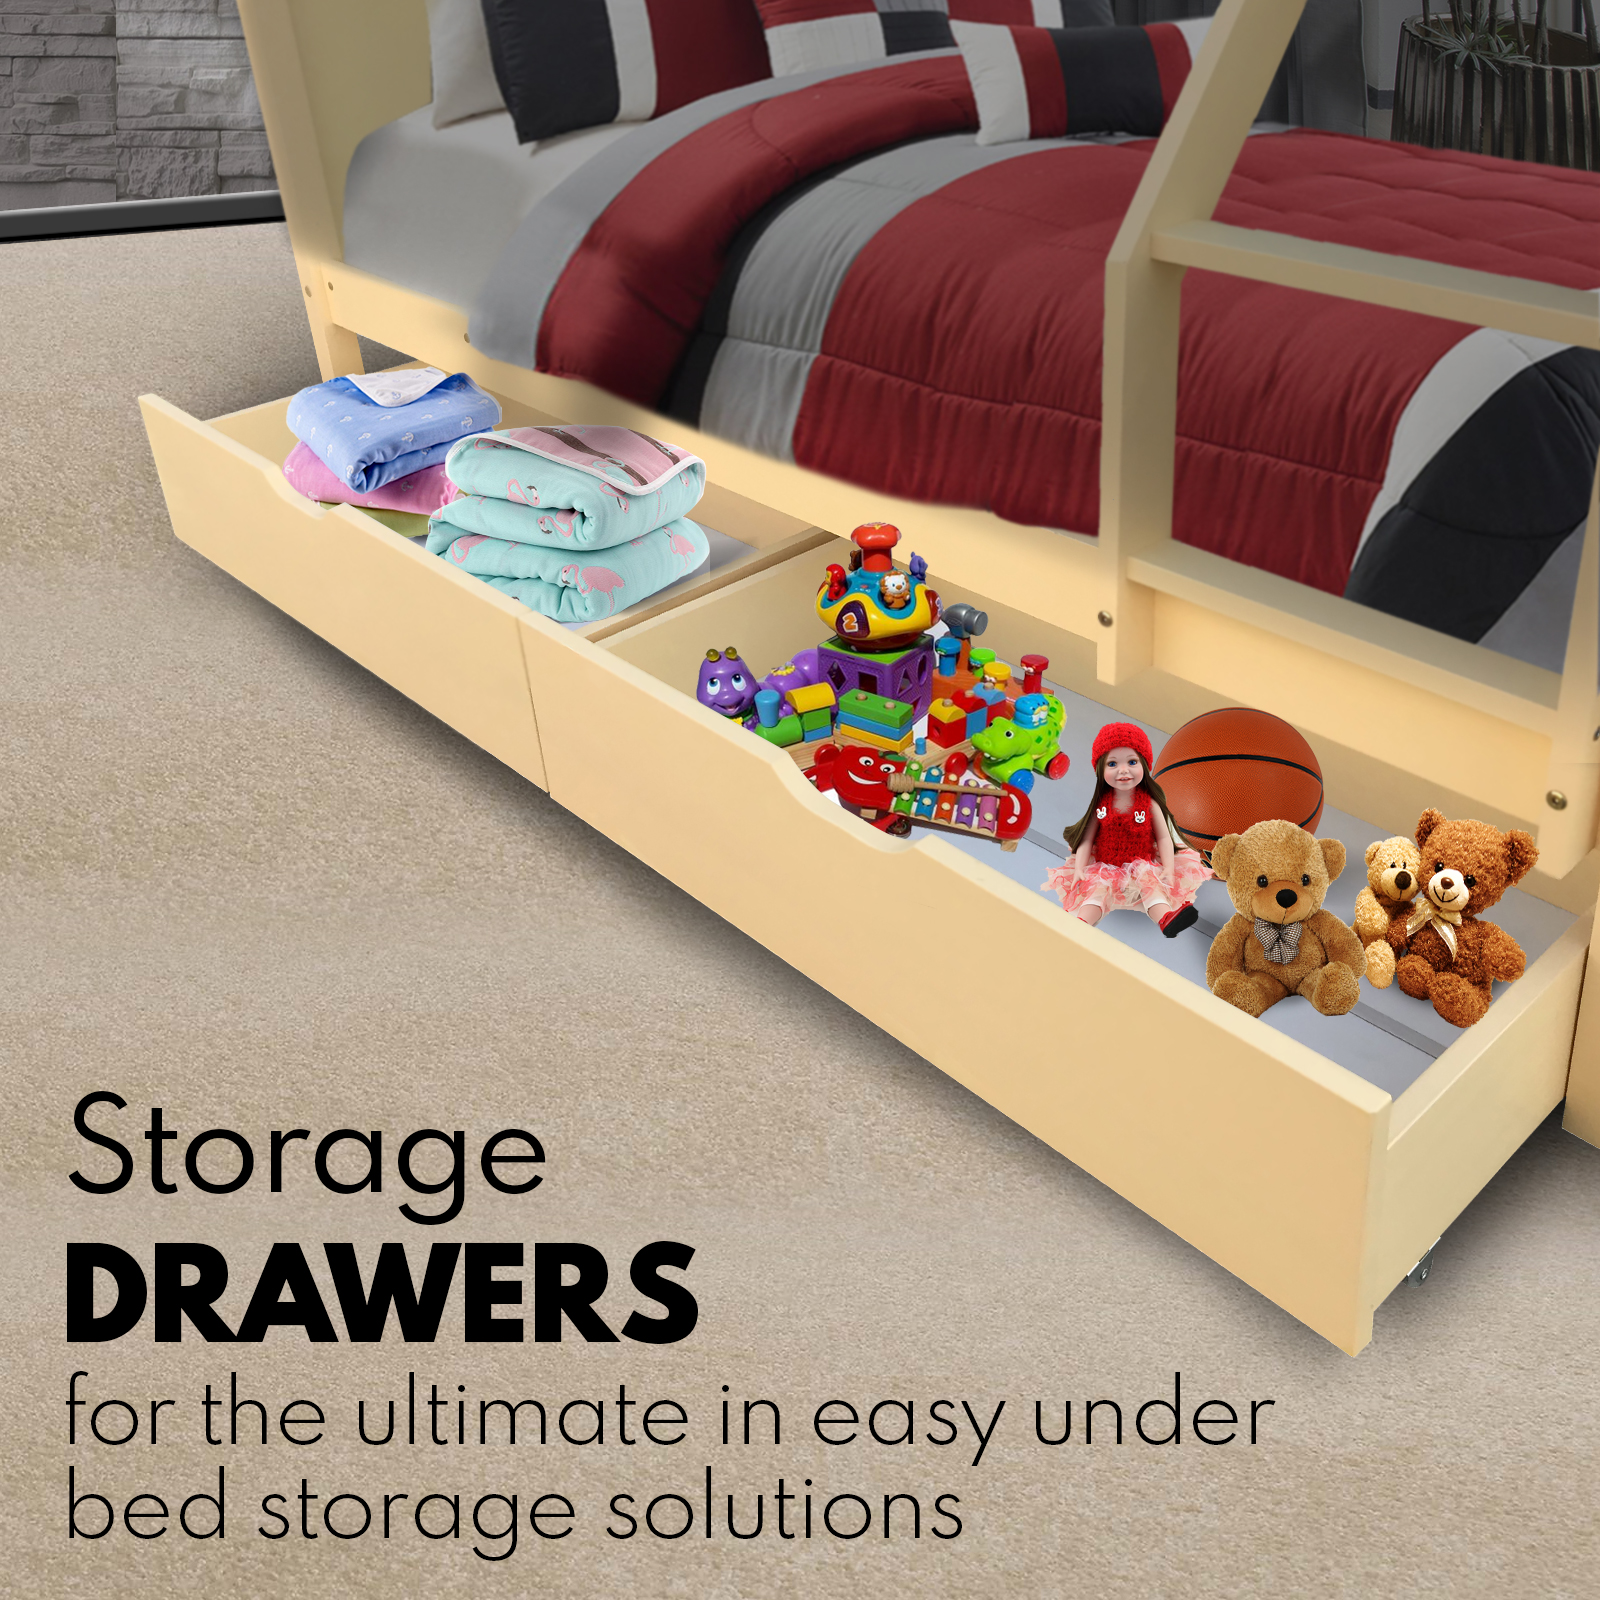 Royal Sleep Brown Bunk Bed Drawers - Under Bed Storage Boxes